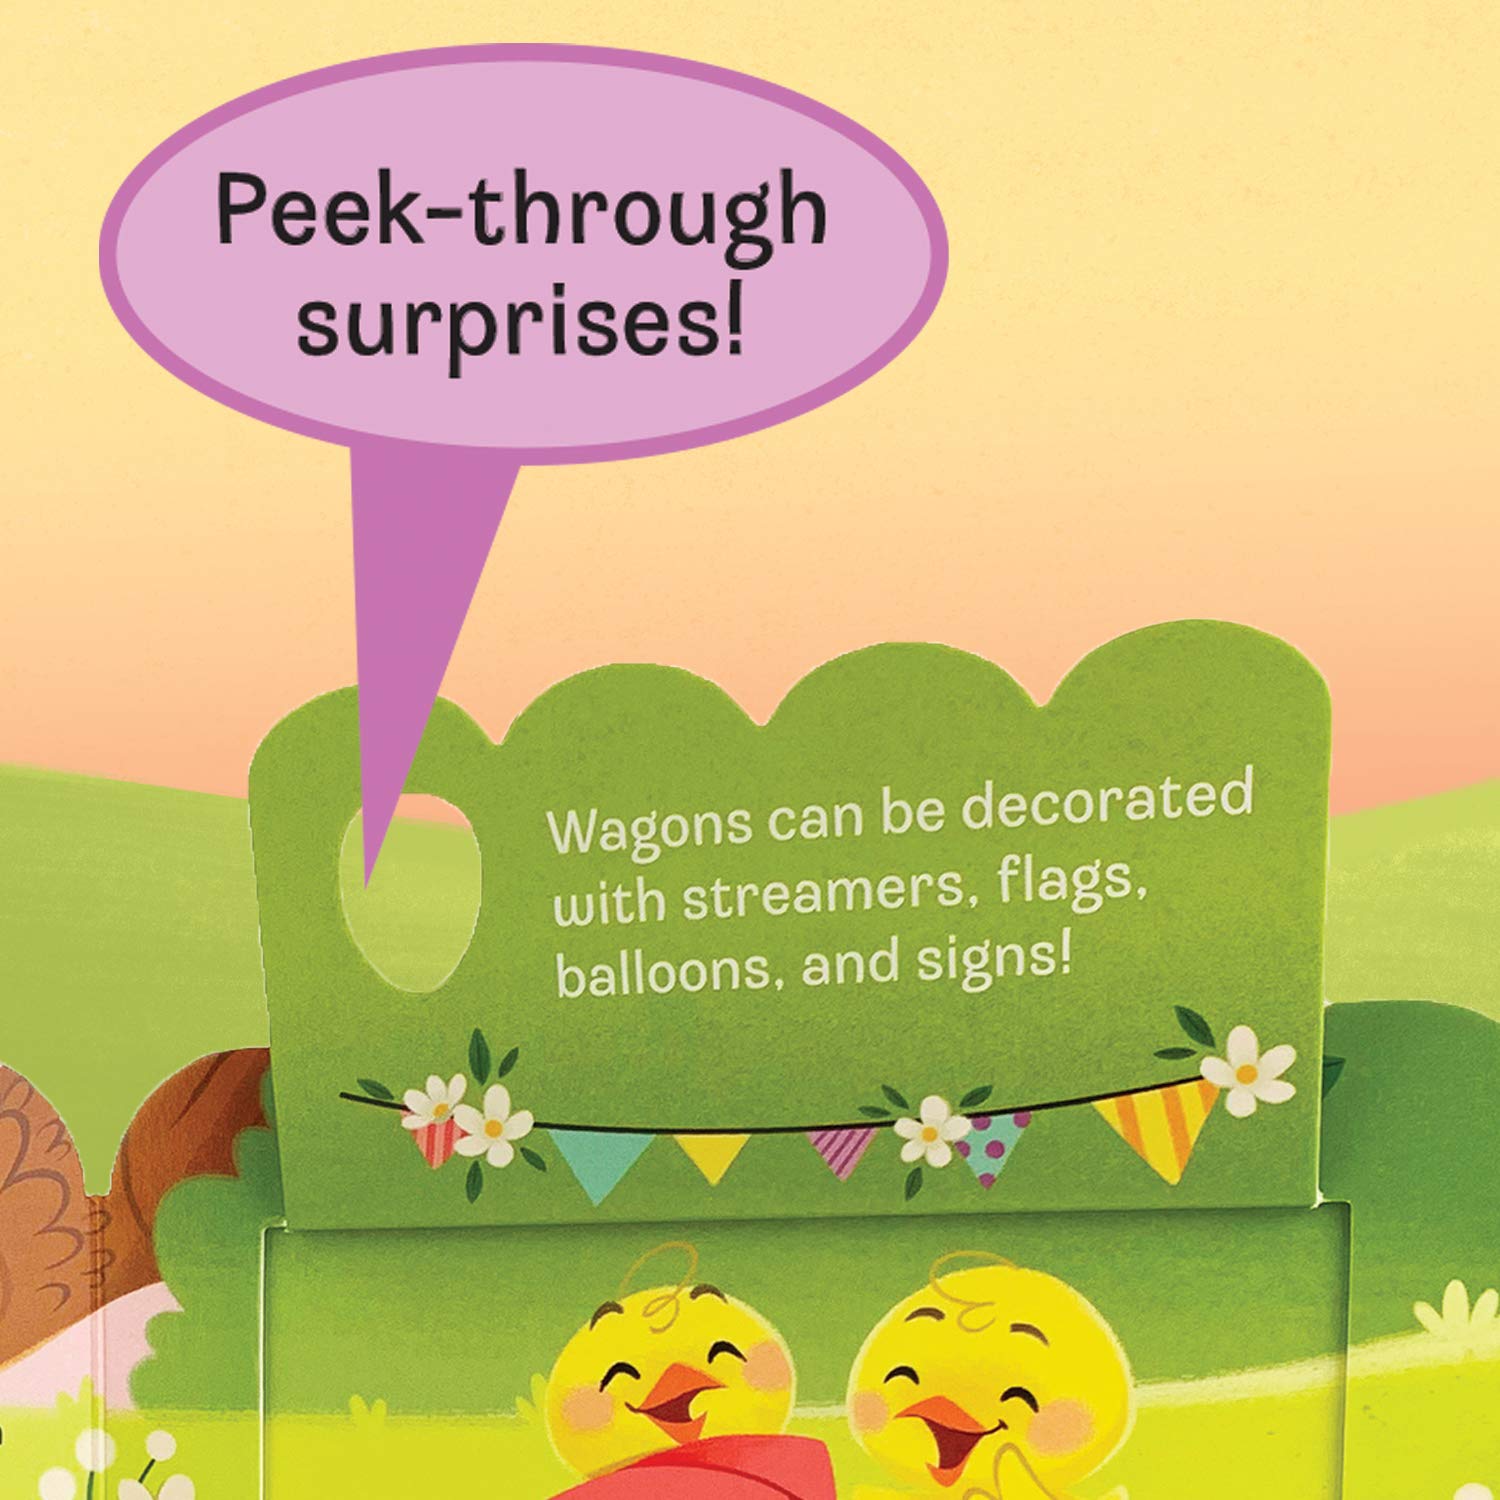 Peek-a-Flap Hop - Children's Lift-a-Flap Board Book Gift for Easter Basket Stuffers, Ages 2-5